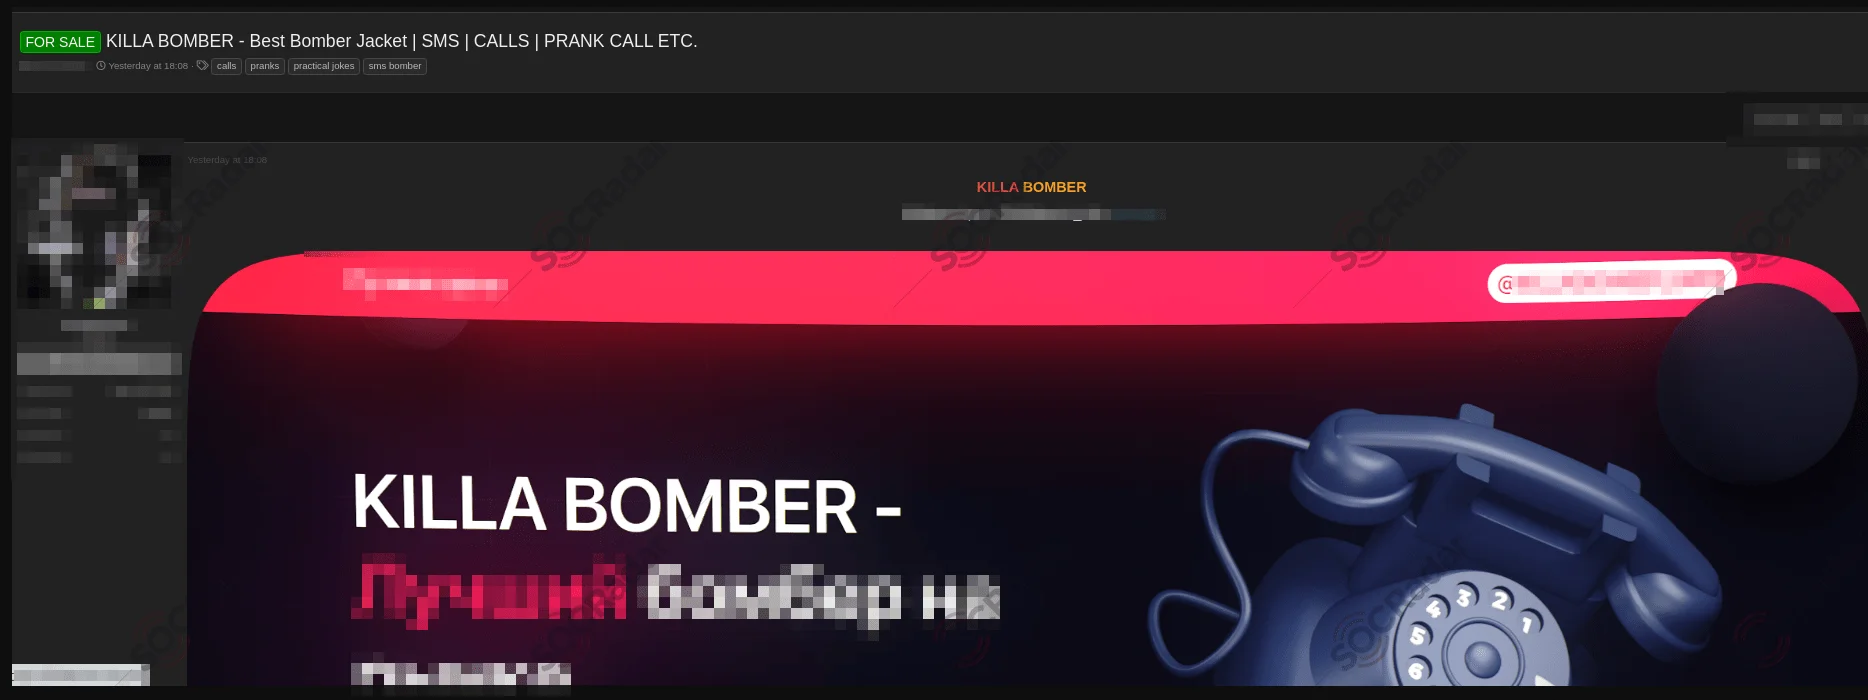 An SMSBomber advertisement on a dark web forum monitored by SOCRadar